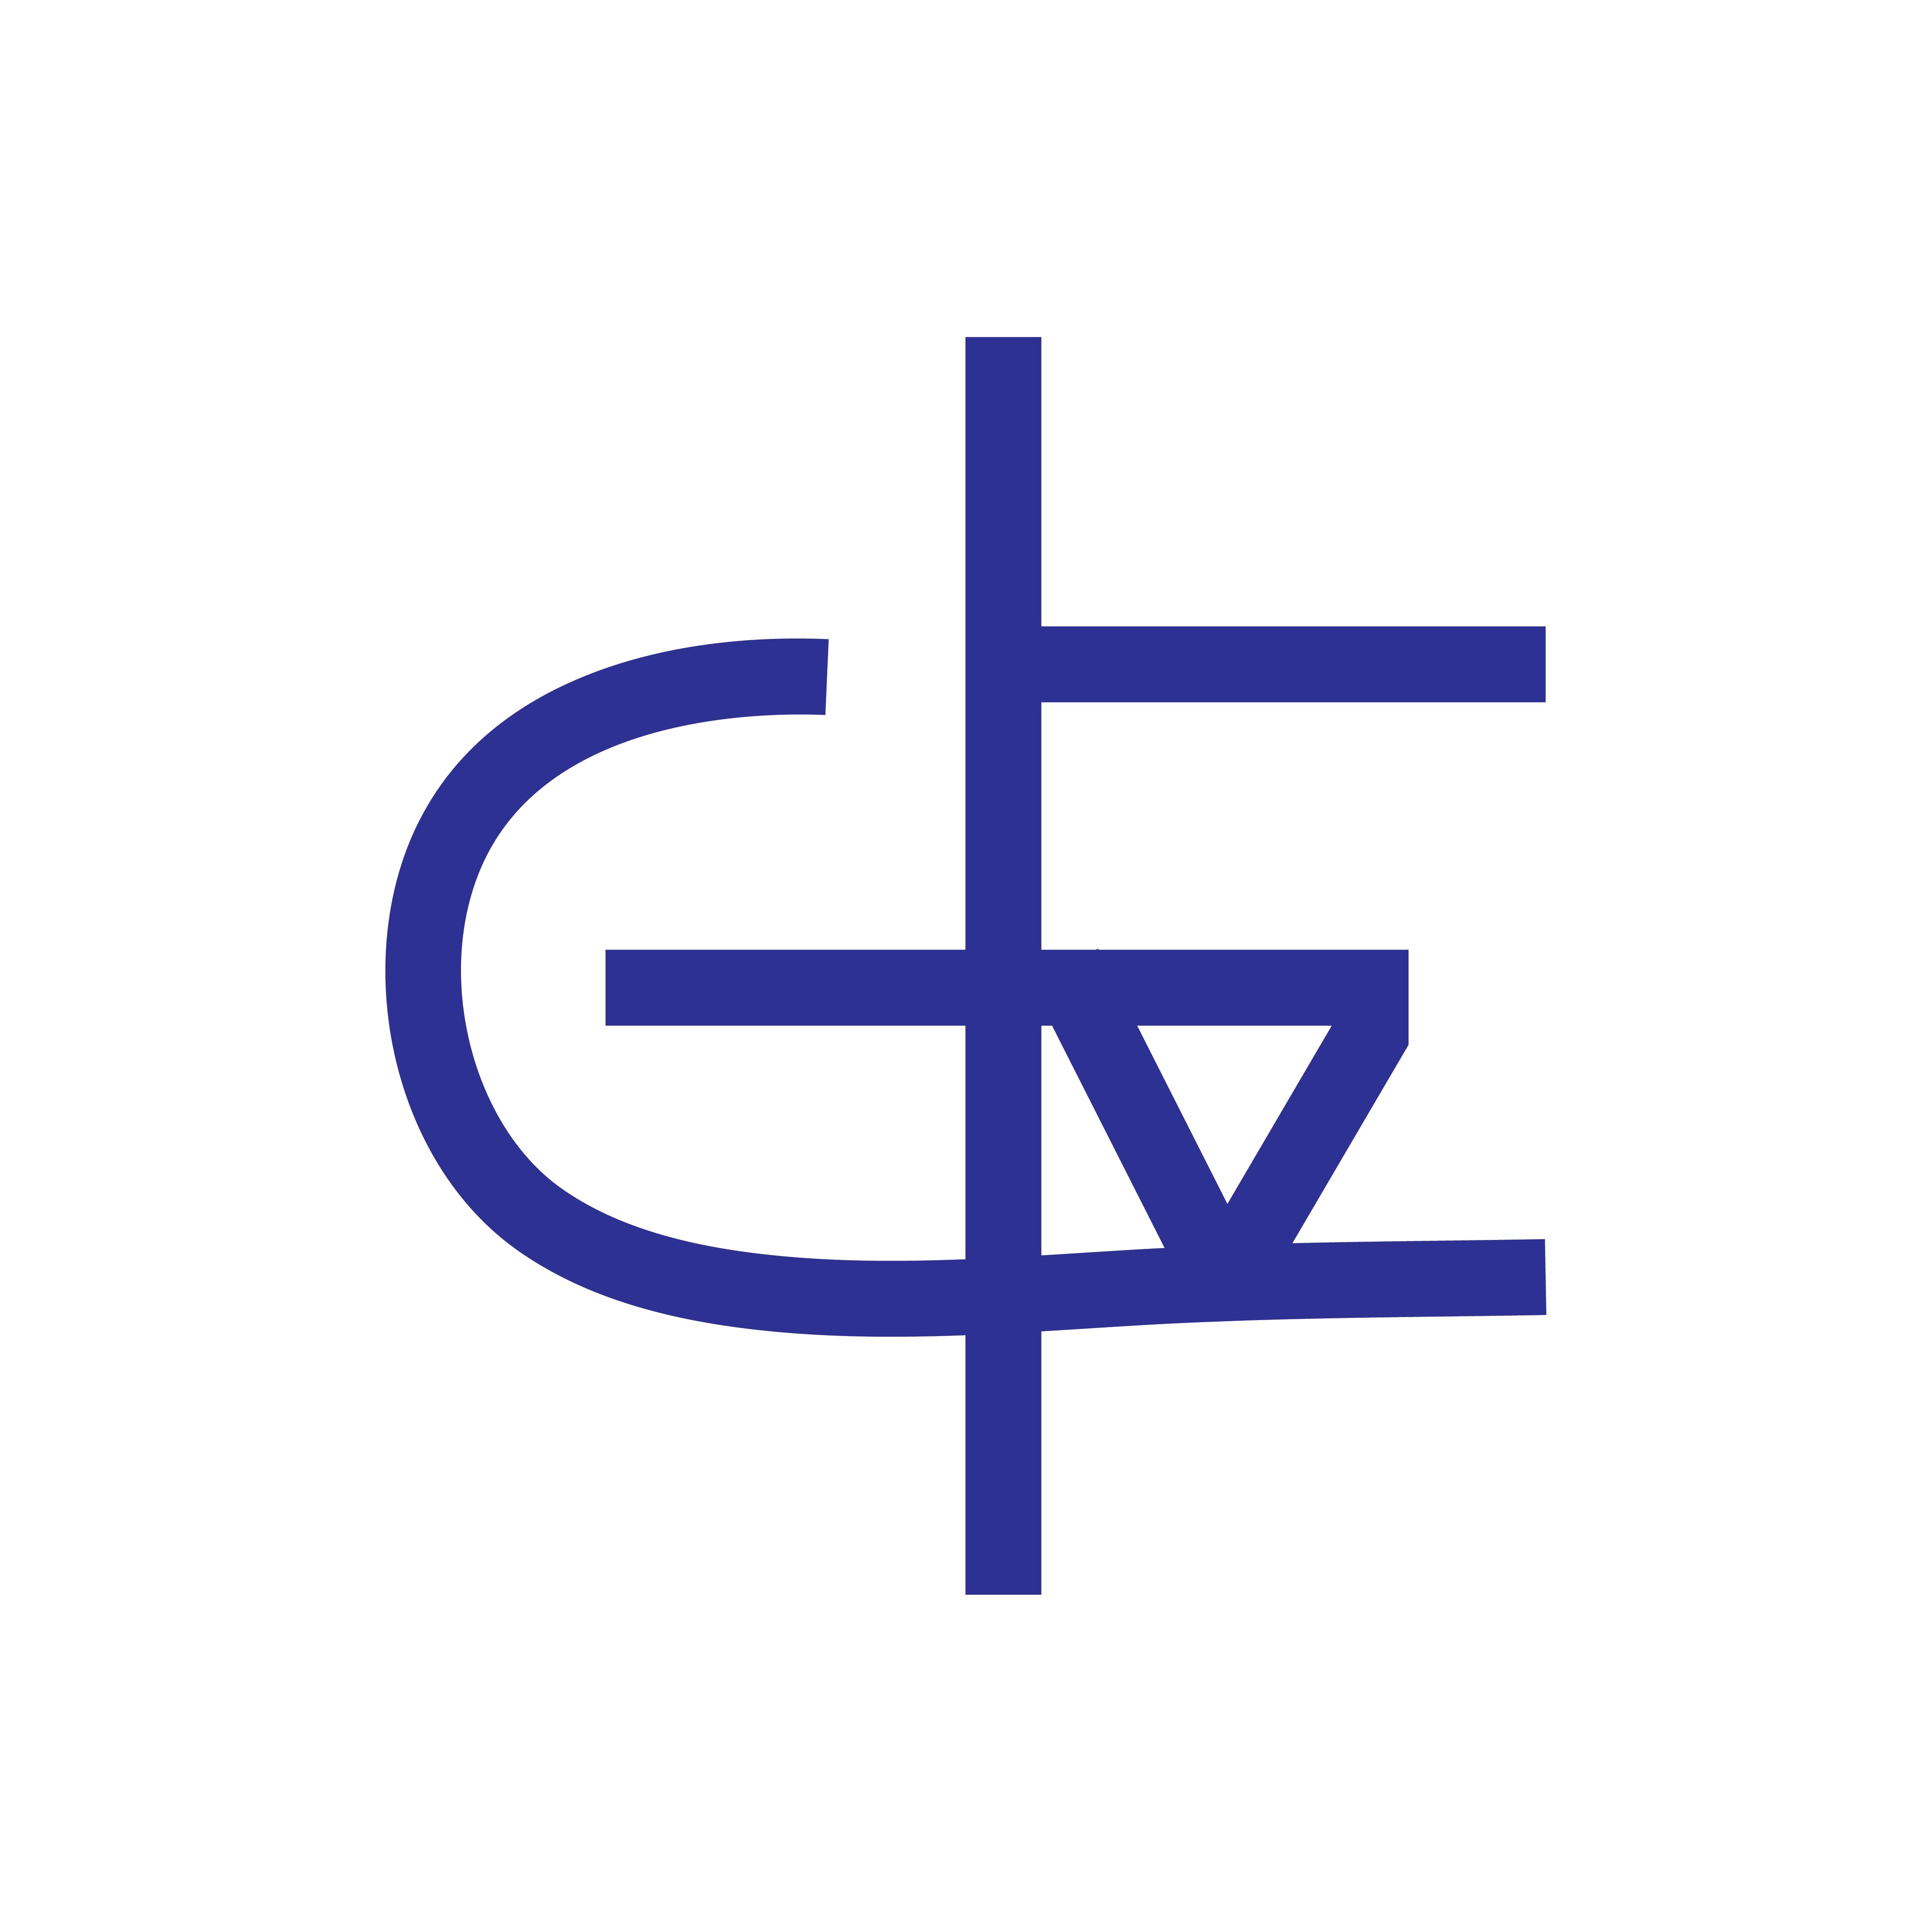 Letter CFA Logo or Icon Design Vector Image Template cover image.